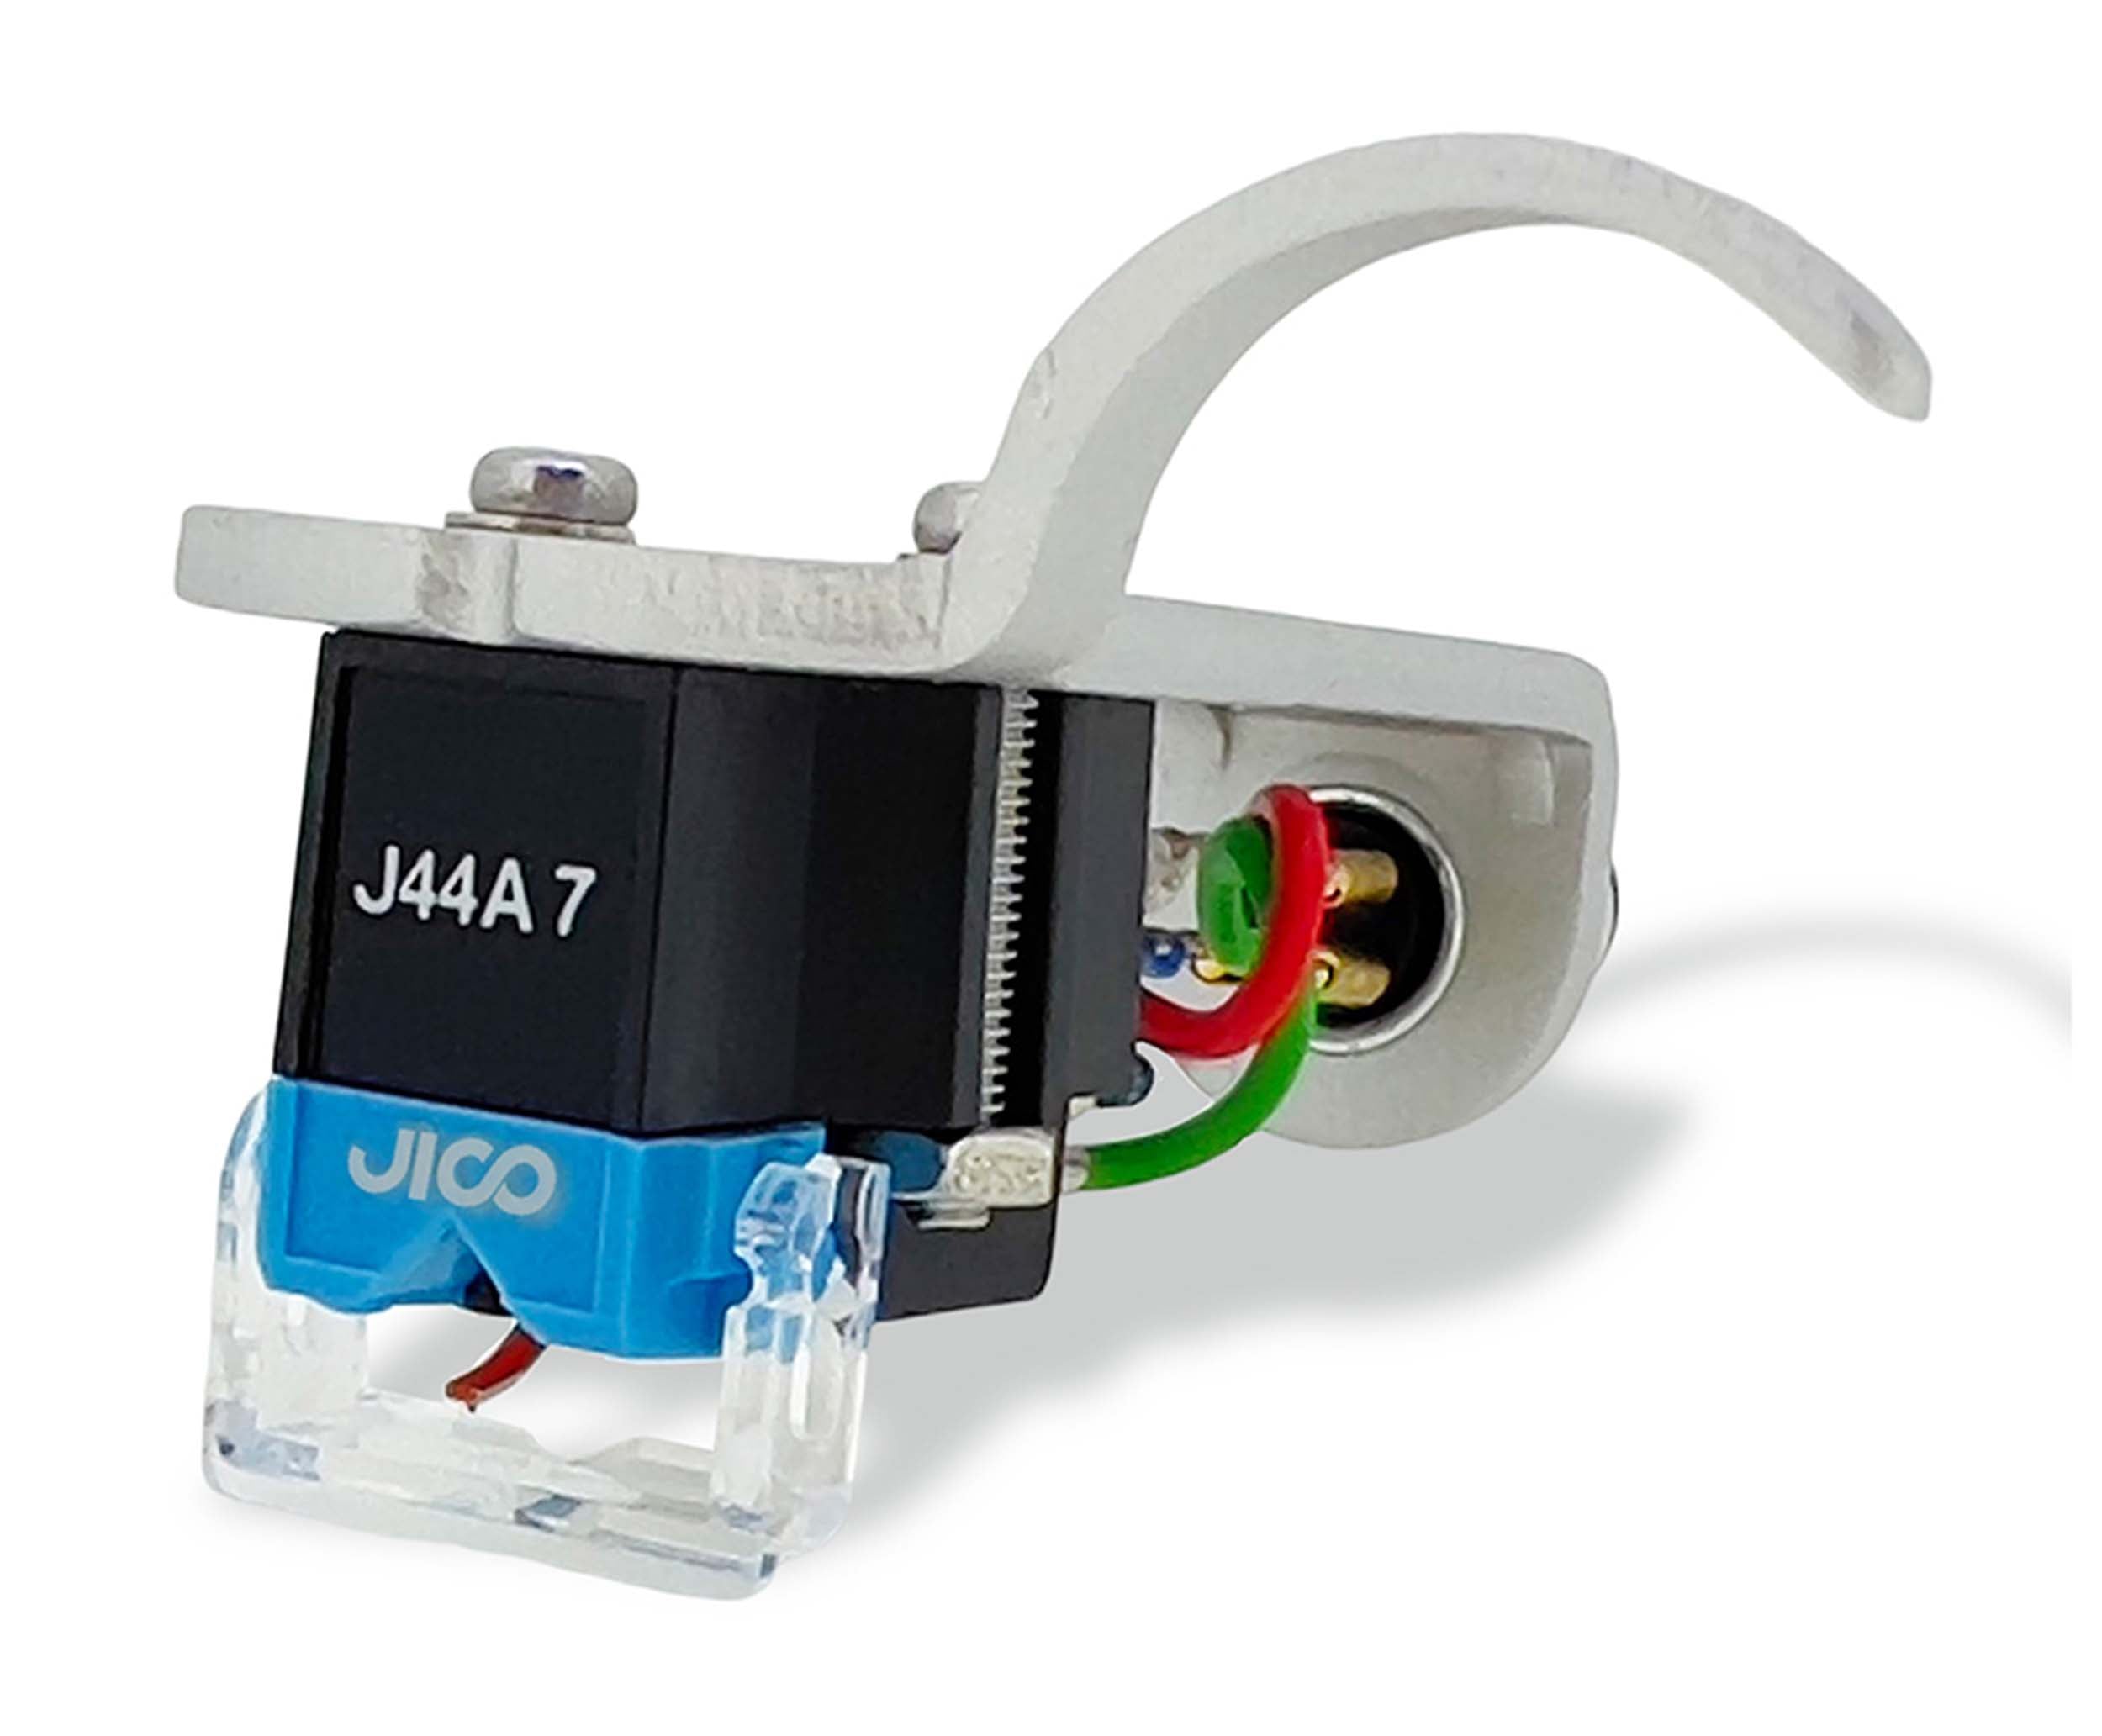 Jico J-AAC0616, Omnia J44A 7 DJ Improved SD Cartridge Mounted on Silver Head Shell Jico